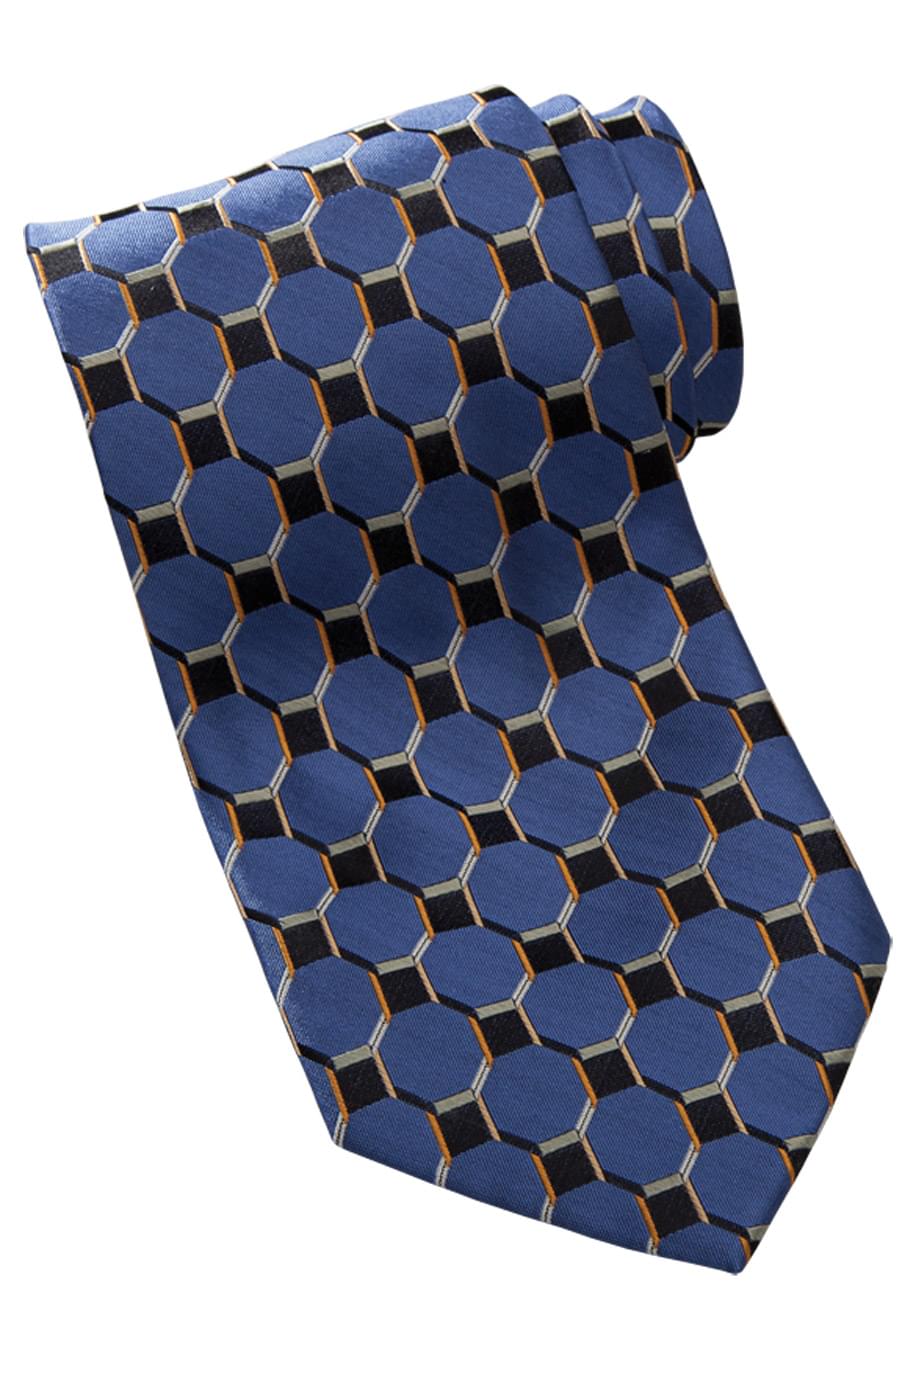 Uniforms - Silk Tie, Honeycomb Pattern, Blue, Black